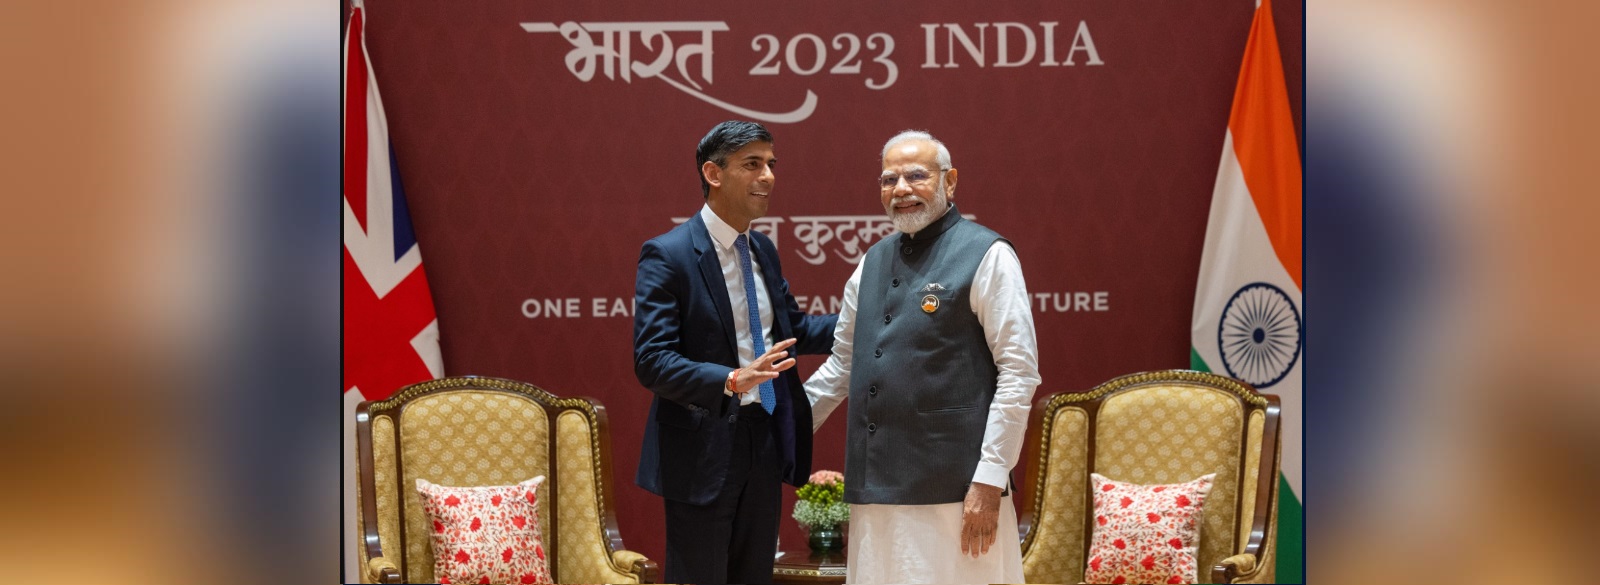 PM Shri Narendra Modi meeting PM Rt Hon. Rishi Sunak at the sidelines of G20 Summit in New Delhi